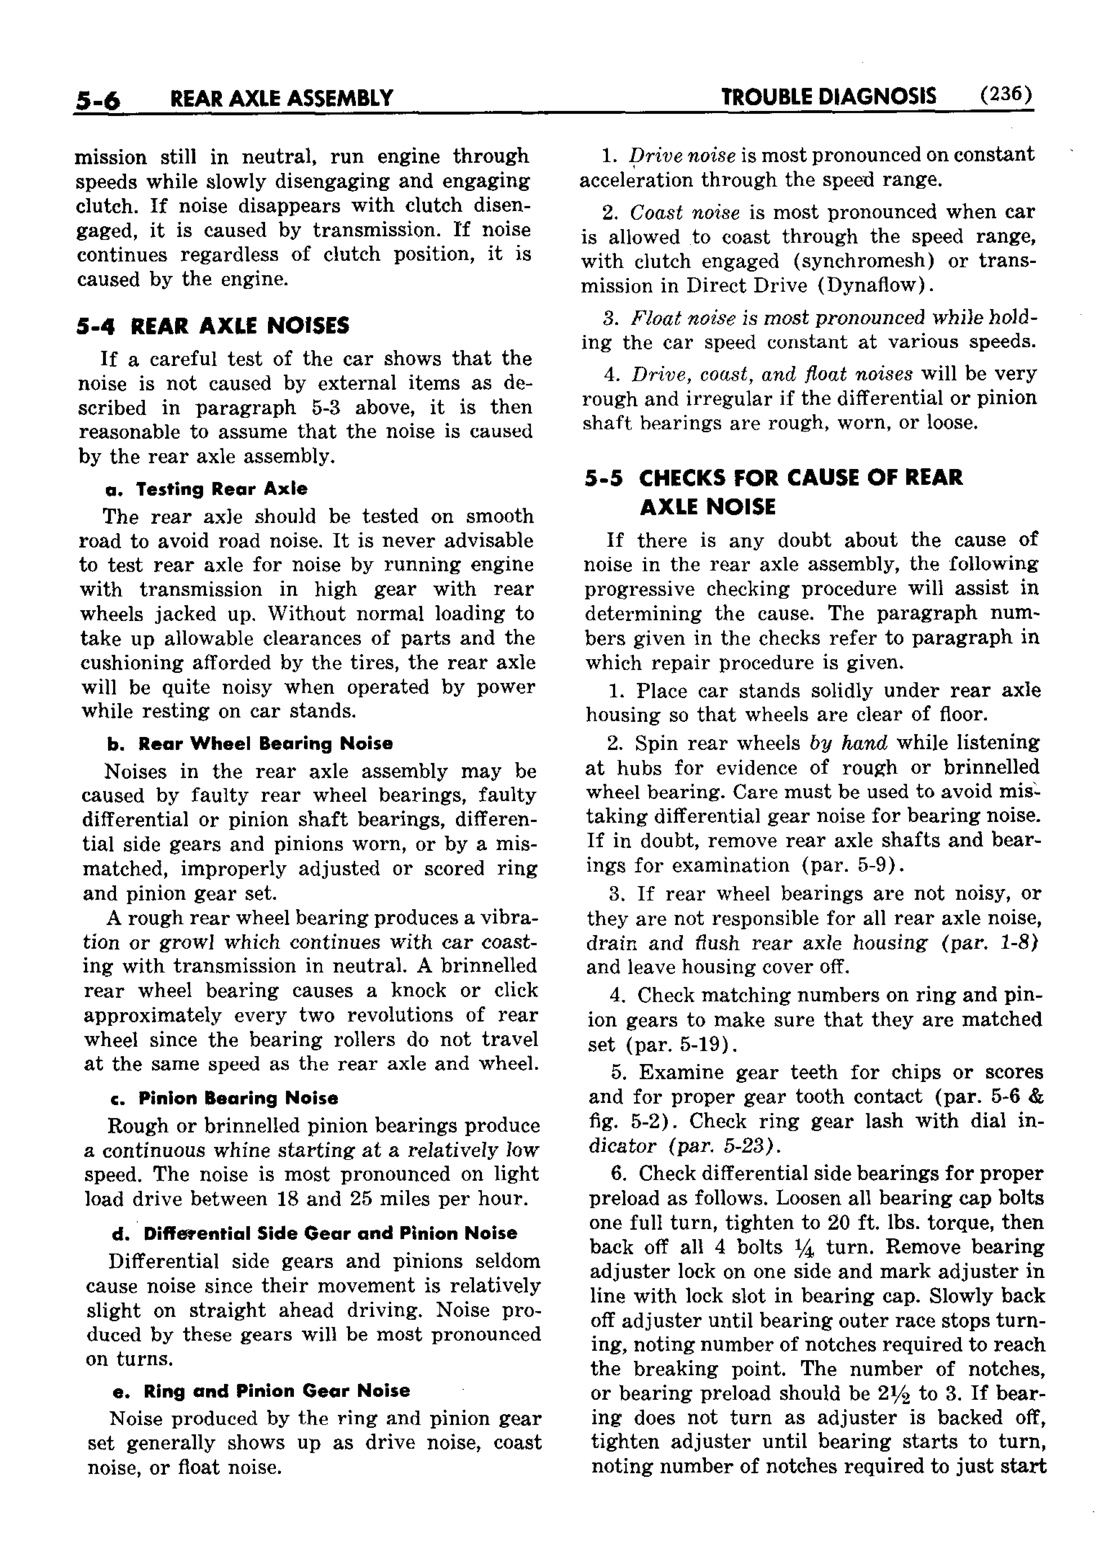 n_06 1952 Buick Shop Manual - Rear Axle-006-006.jpg